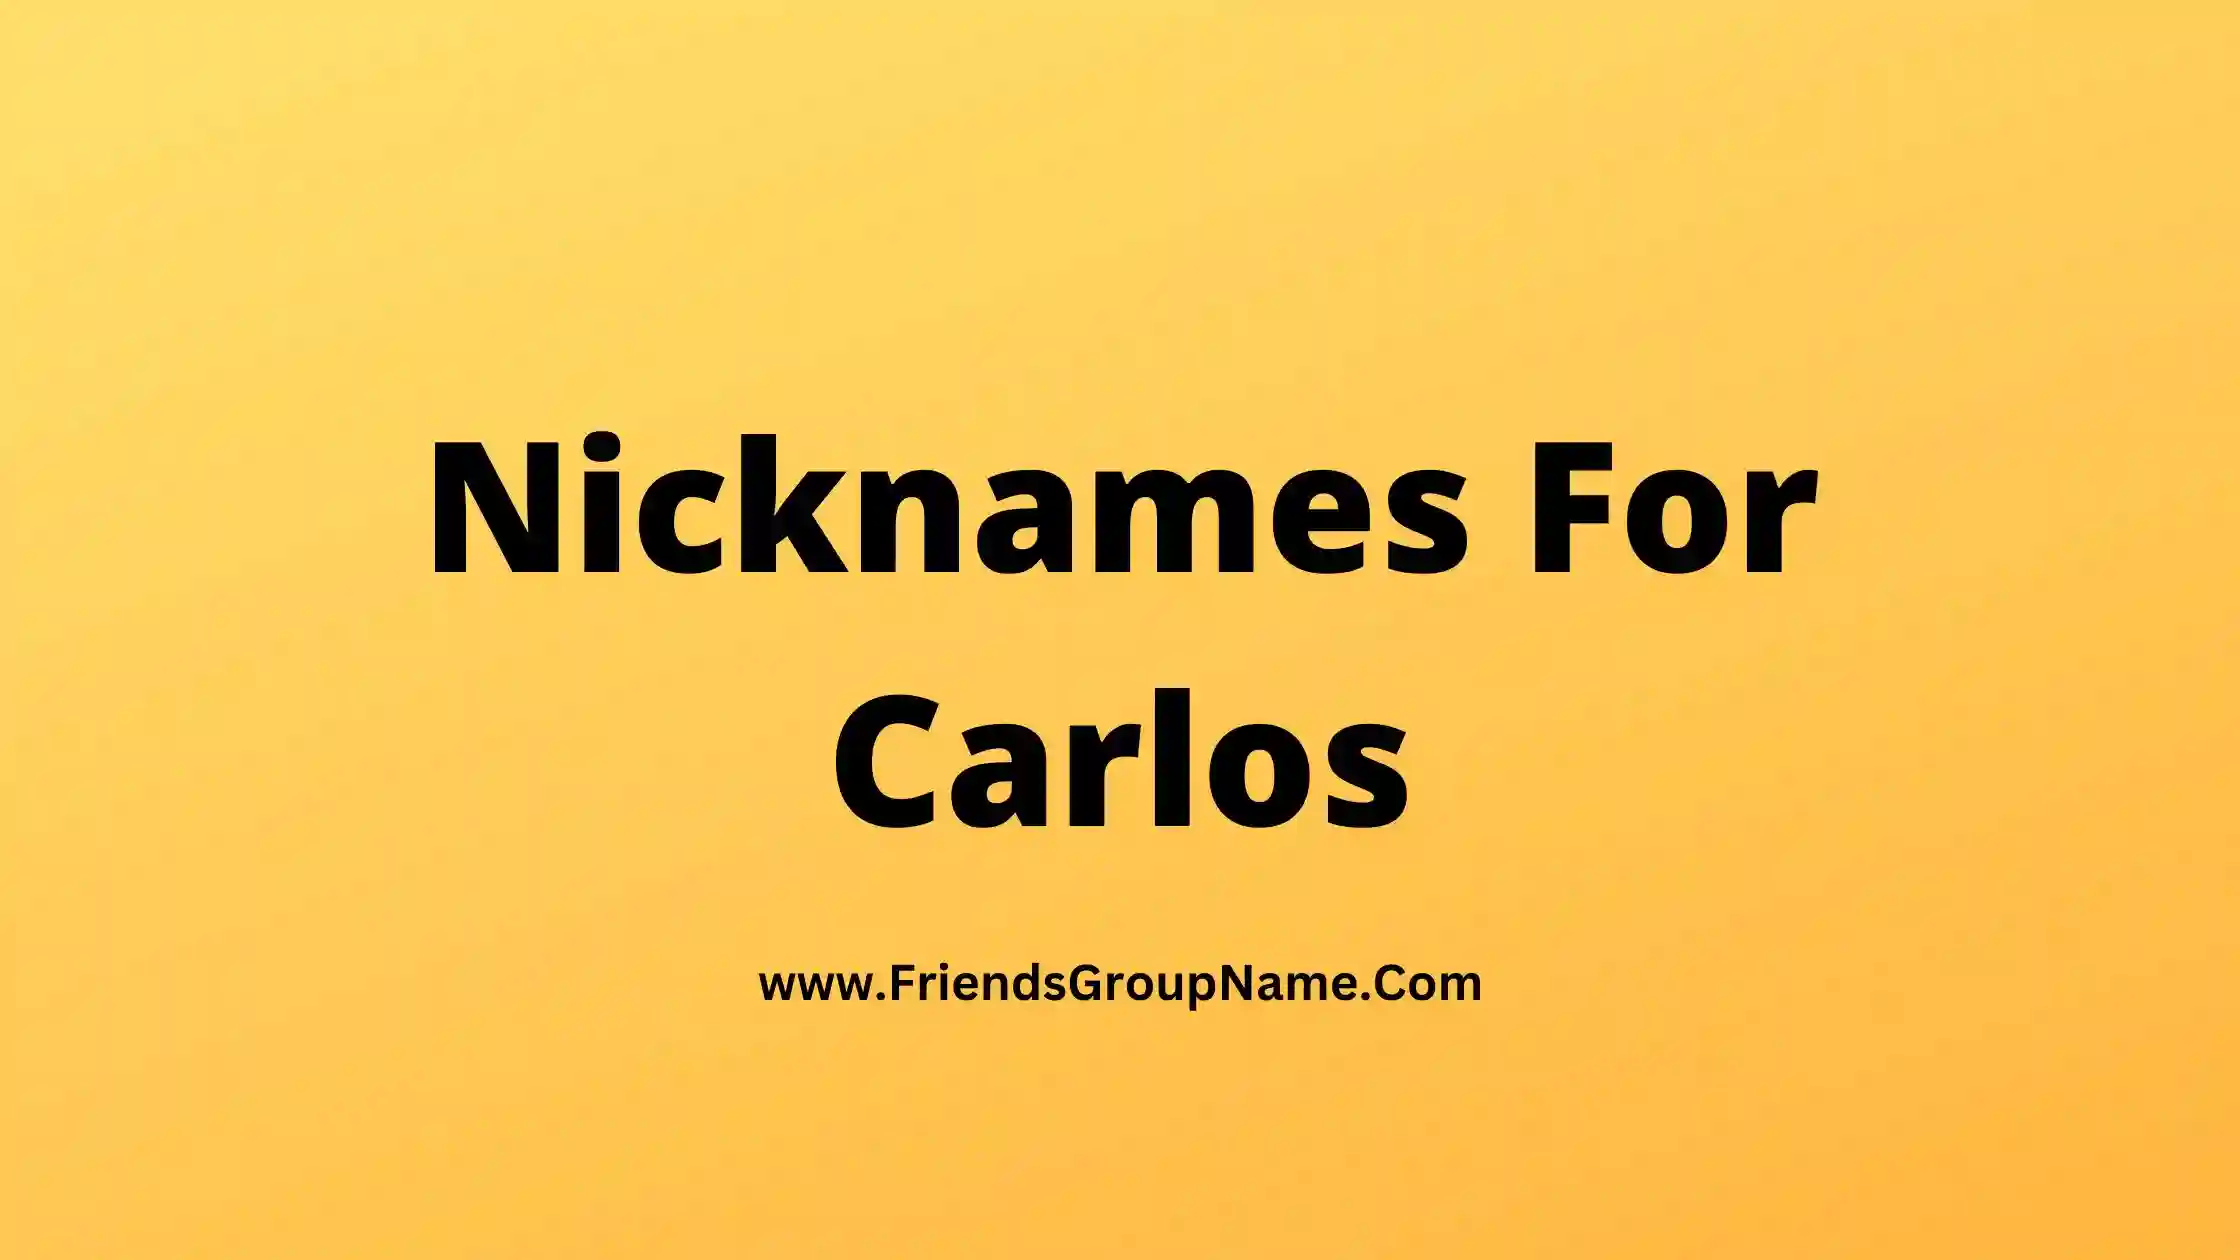 Nicknames For Carlos